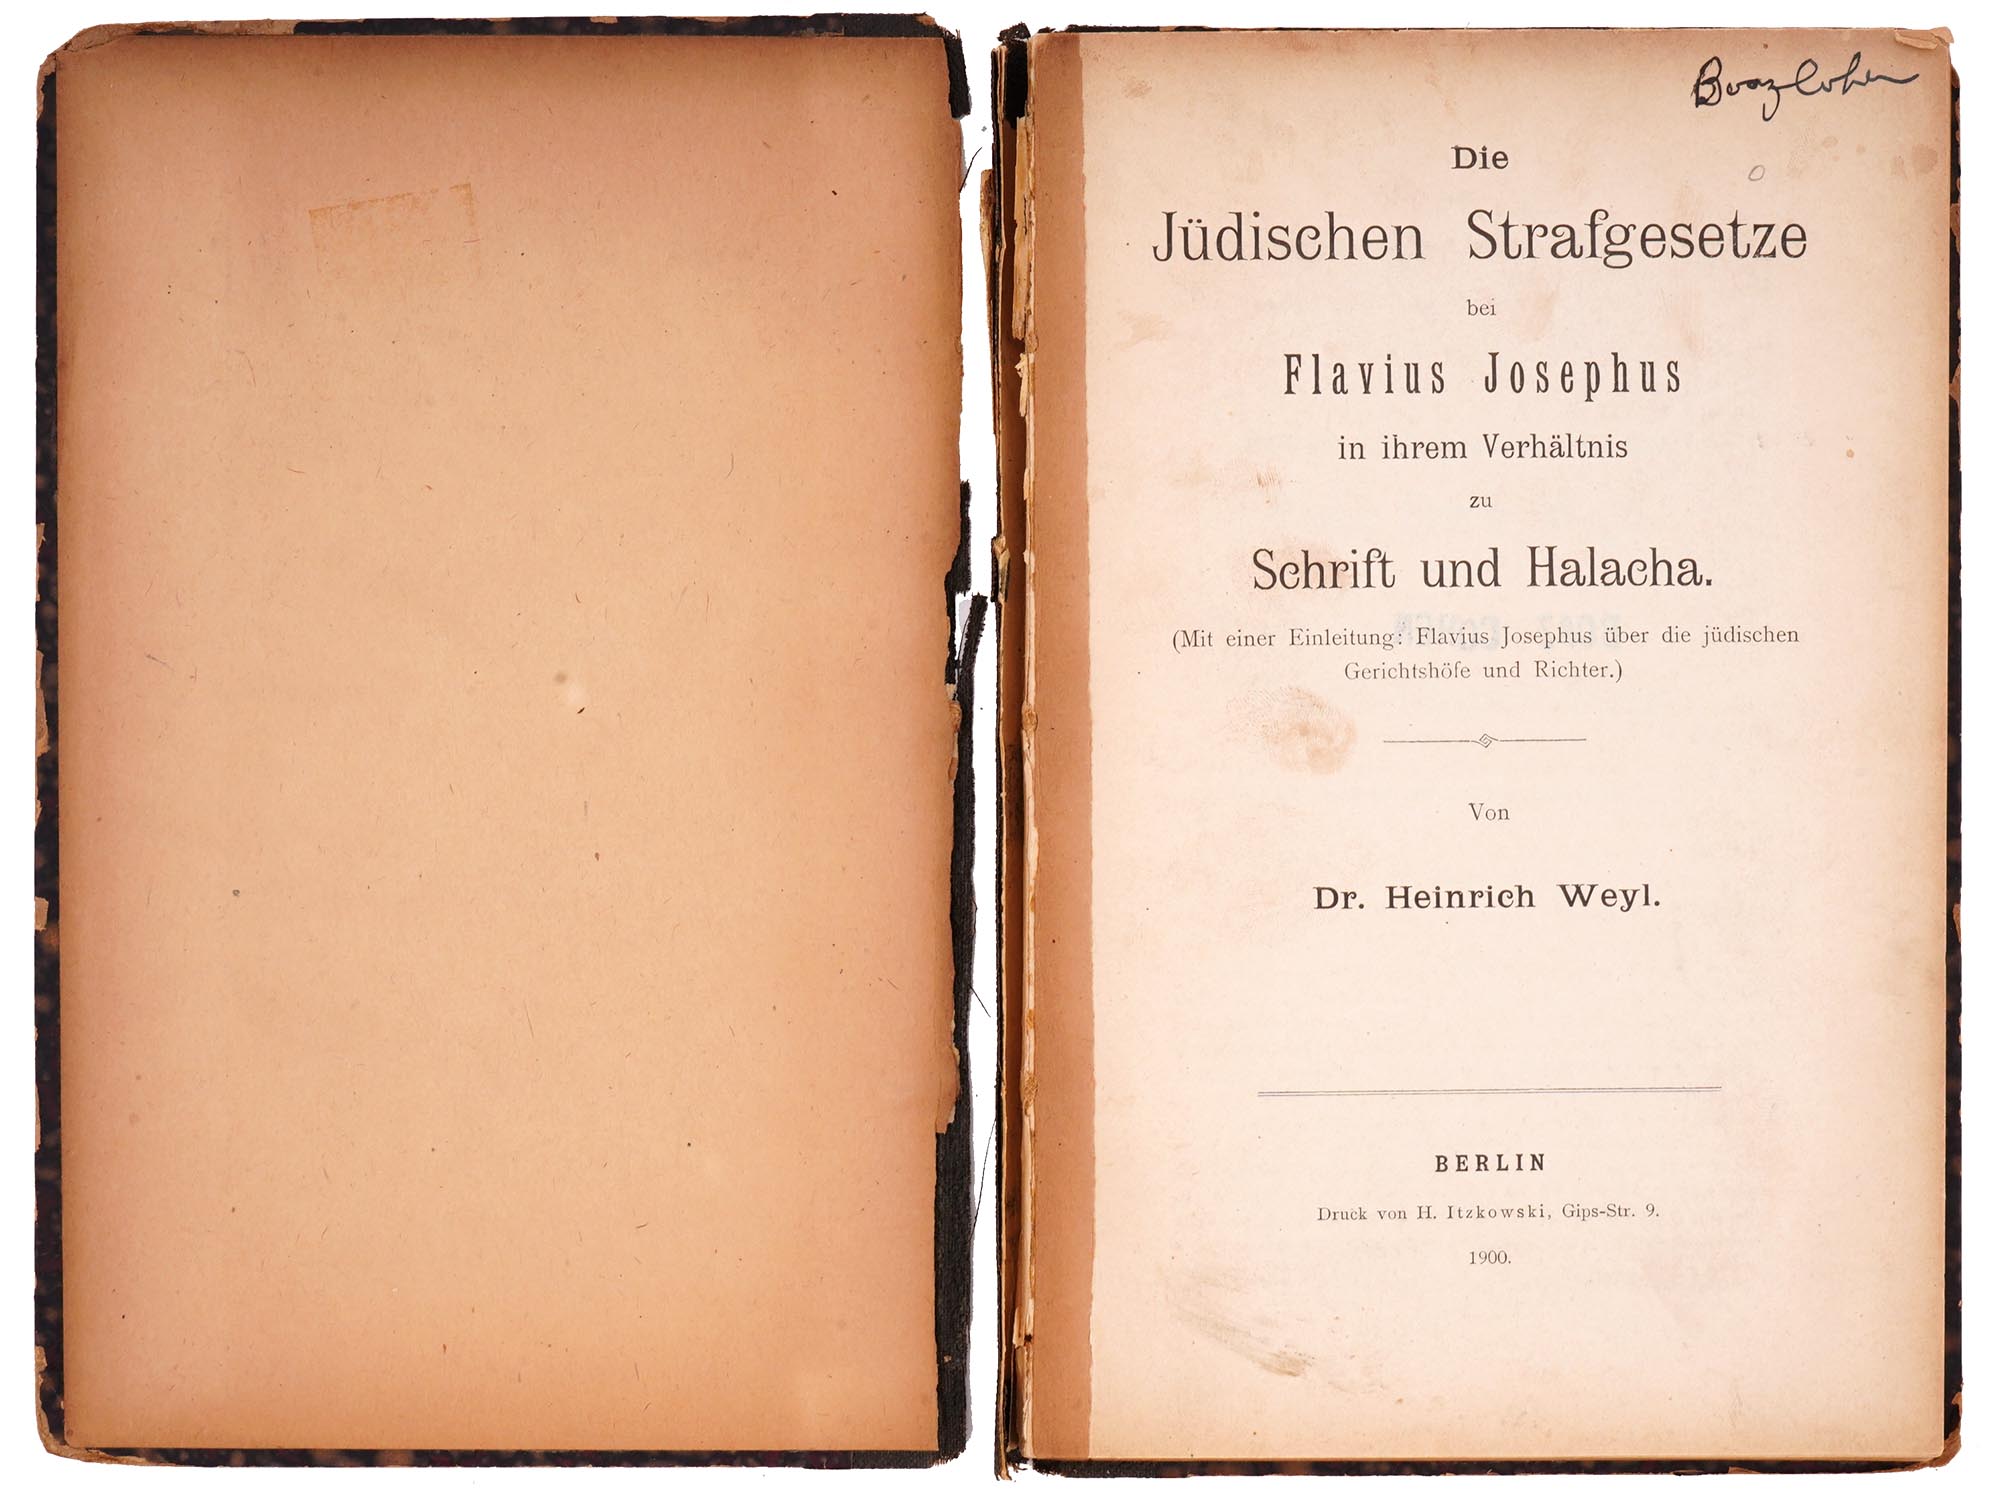 PASSOVER HAGGADAH AND ANTIQUE GERMAN JUDAICA BOOK PIC-5